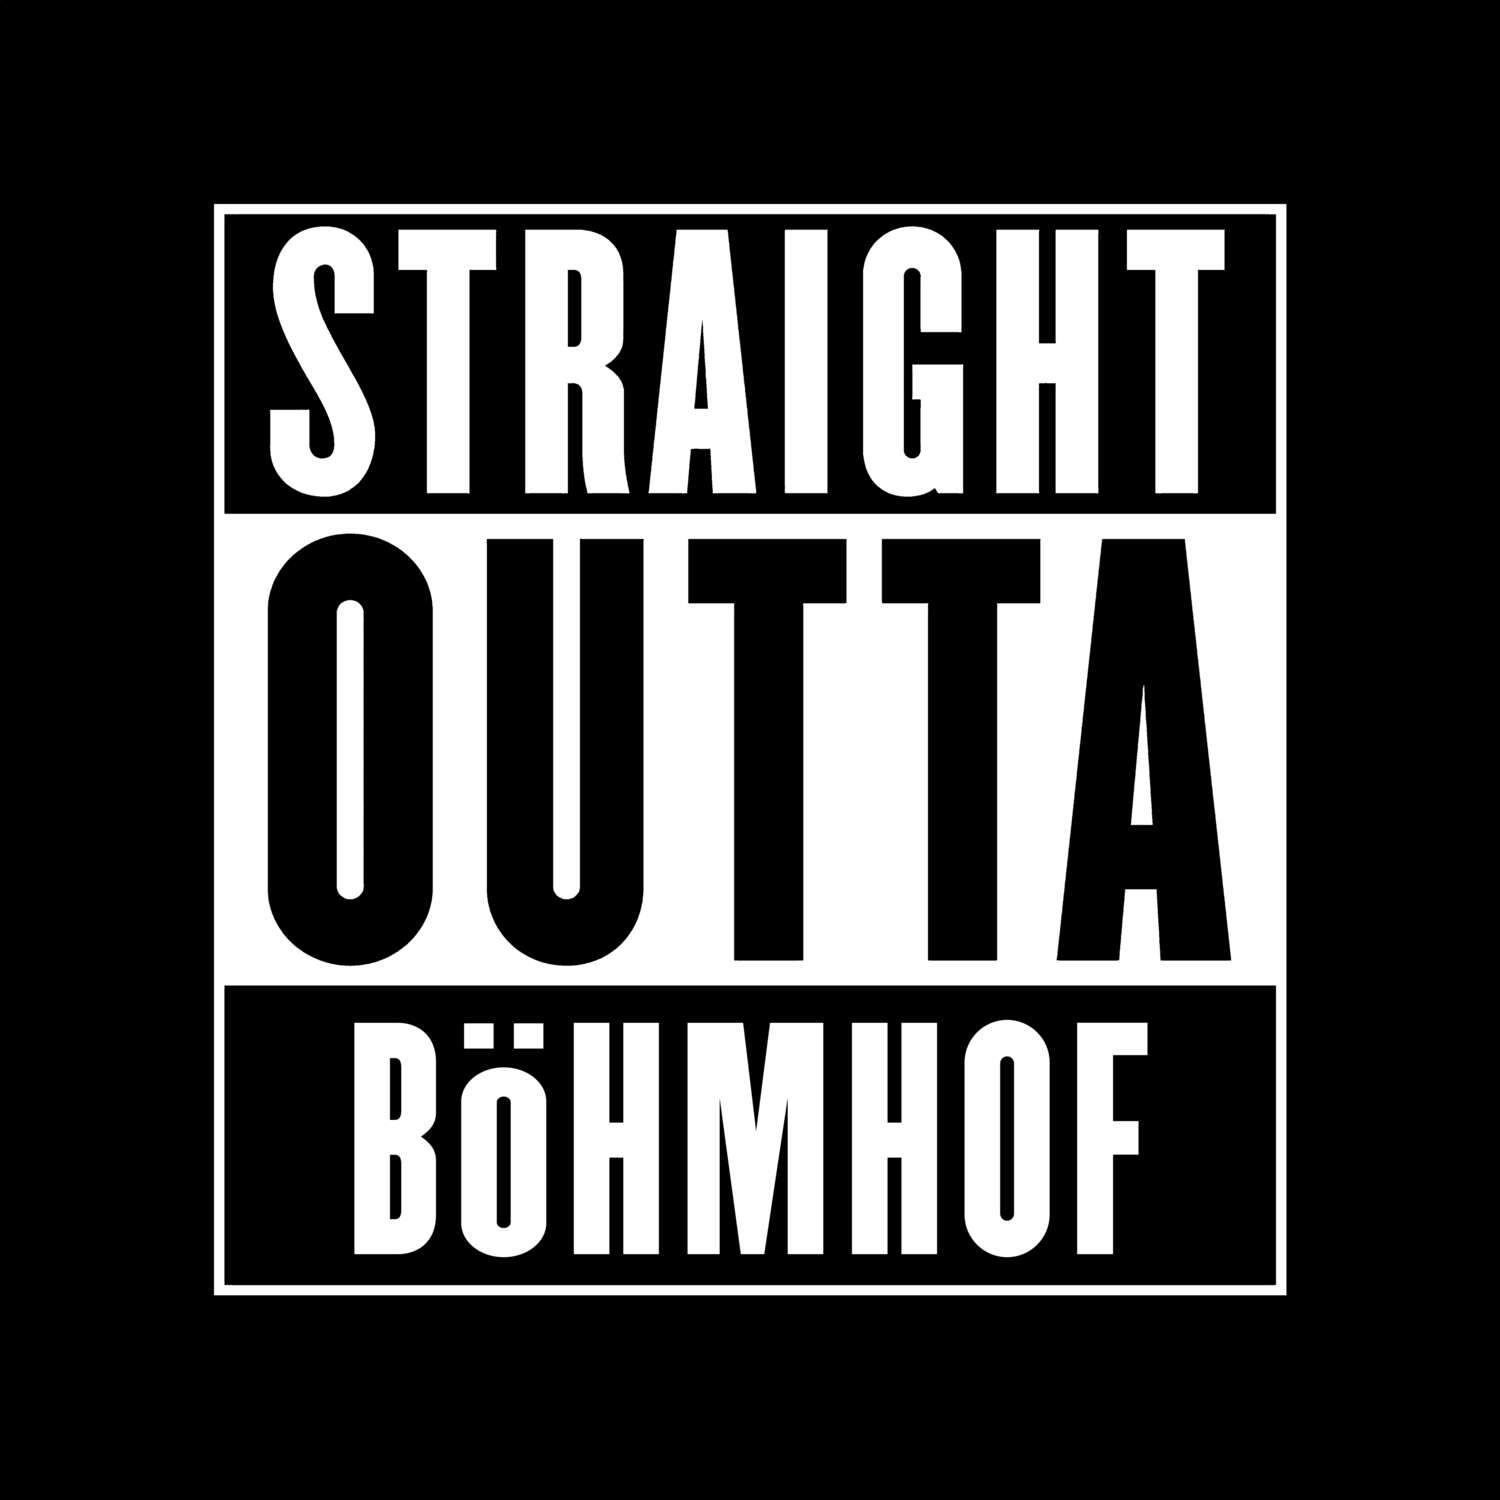 Böhmhof T-Shirt »Straight Outta«